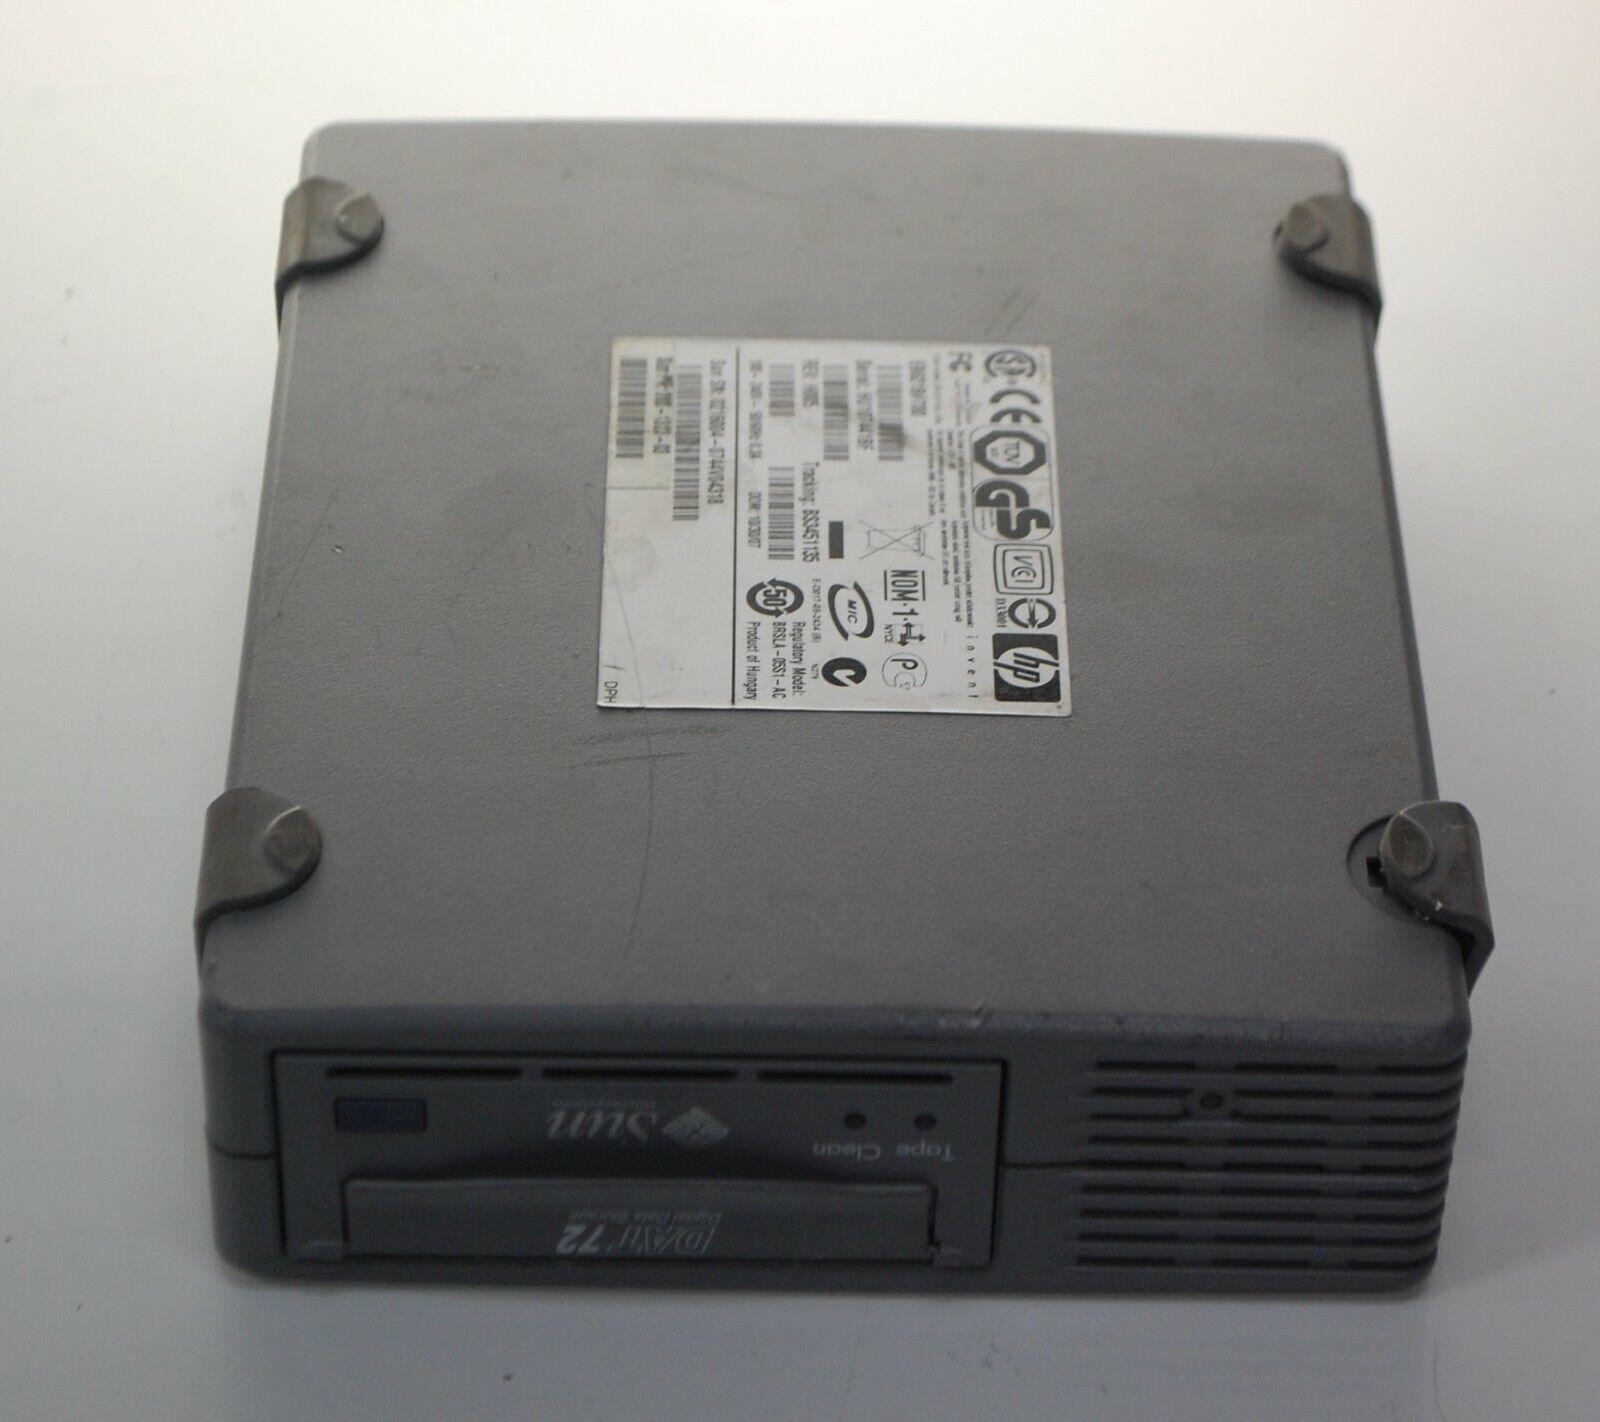 Sun Microsystems DAT 72 Tape Drive BRSLA-05S1-AC EB621B#700 - $70.08